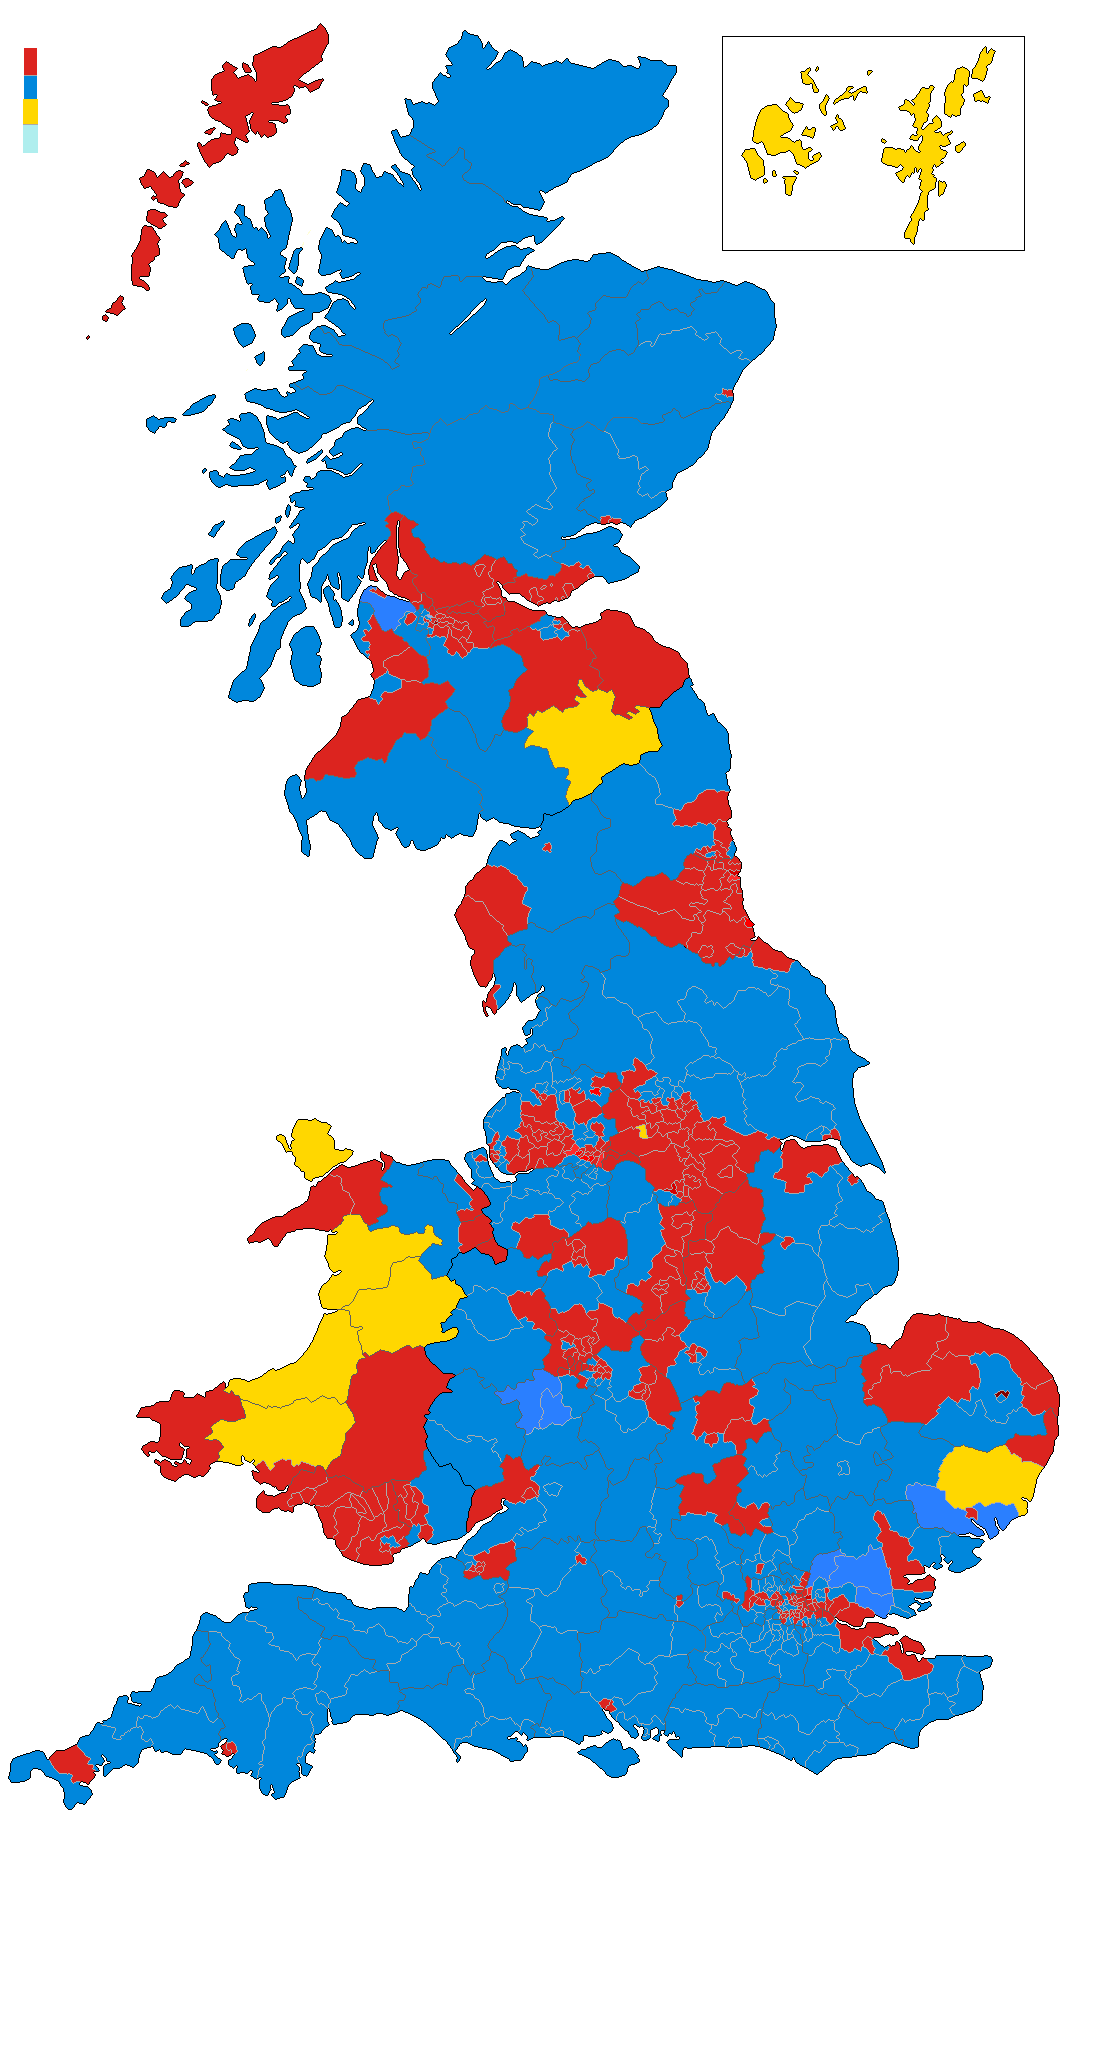 United Kingdom general election, 1950 - Wikipedia